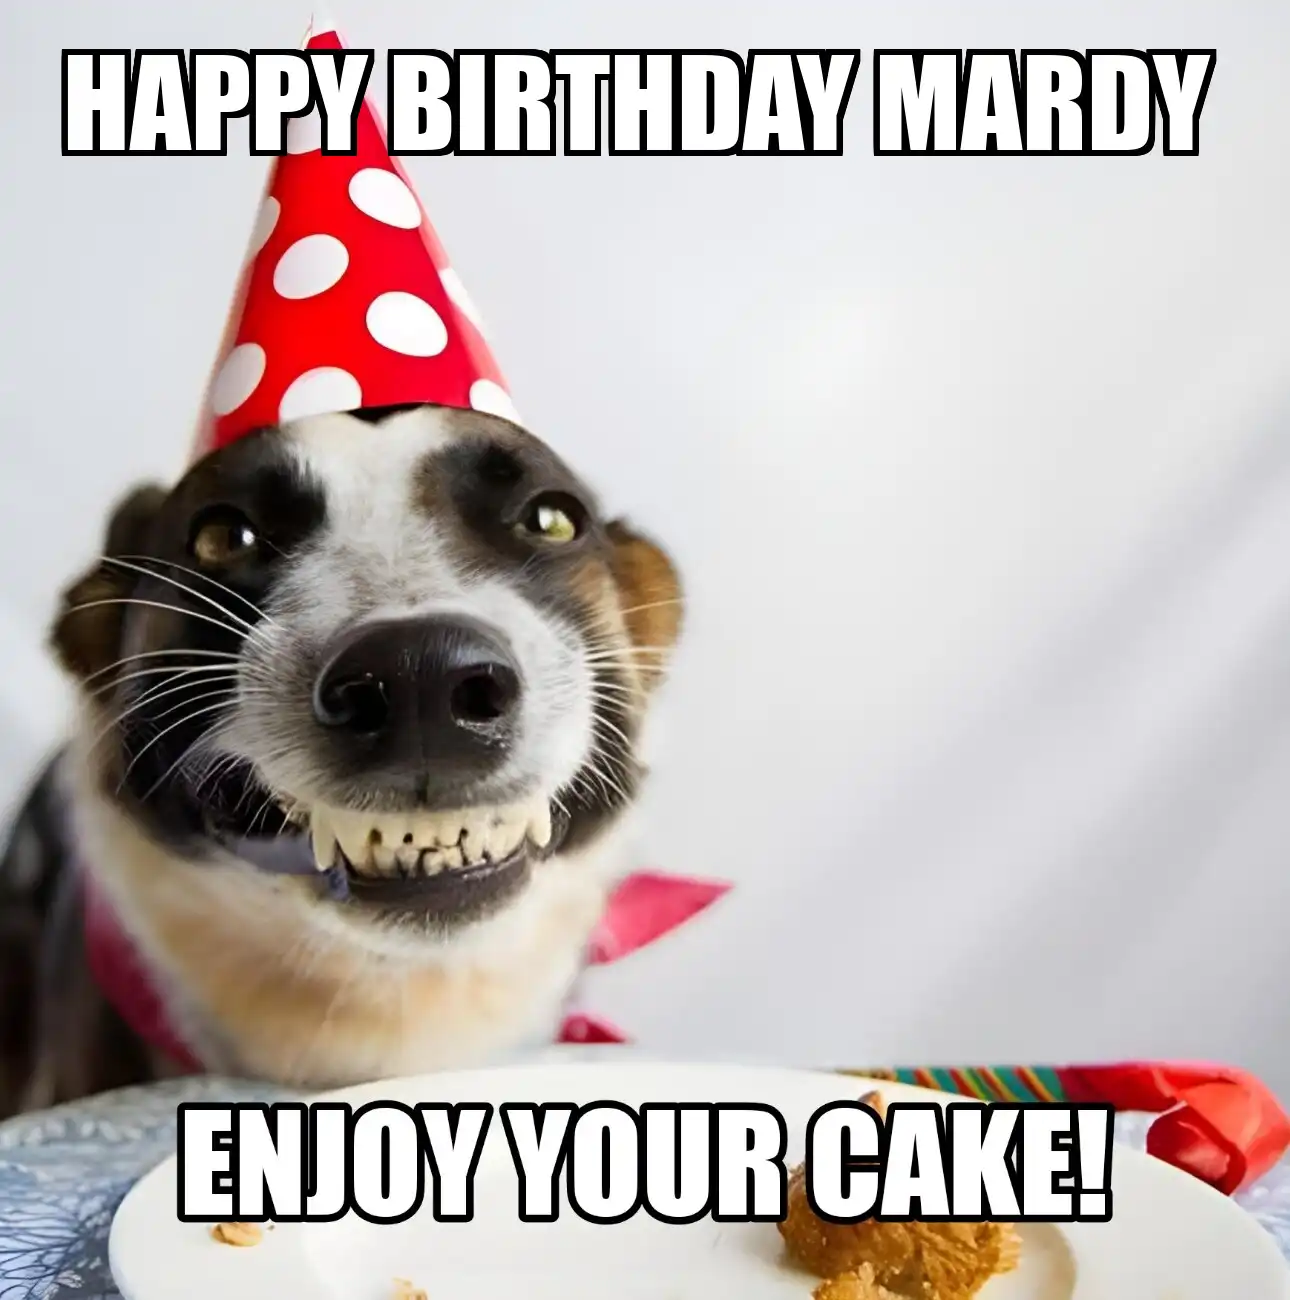 Happy Birthday Mardy Enjoy Your Cake Dog Meme